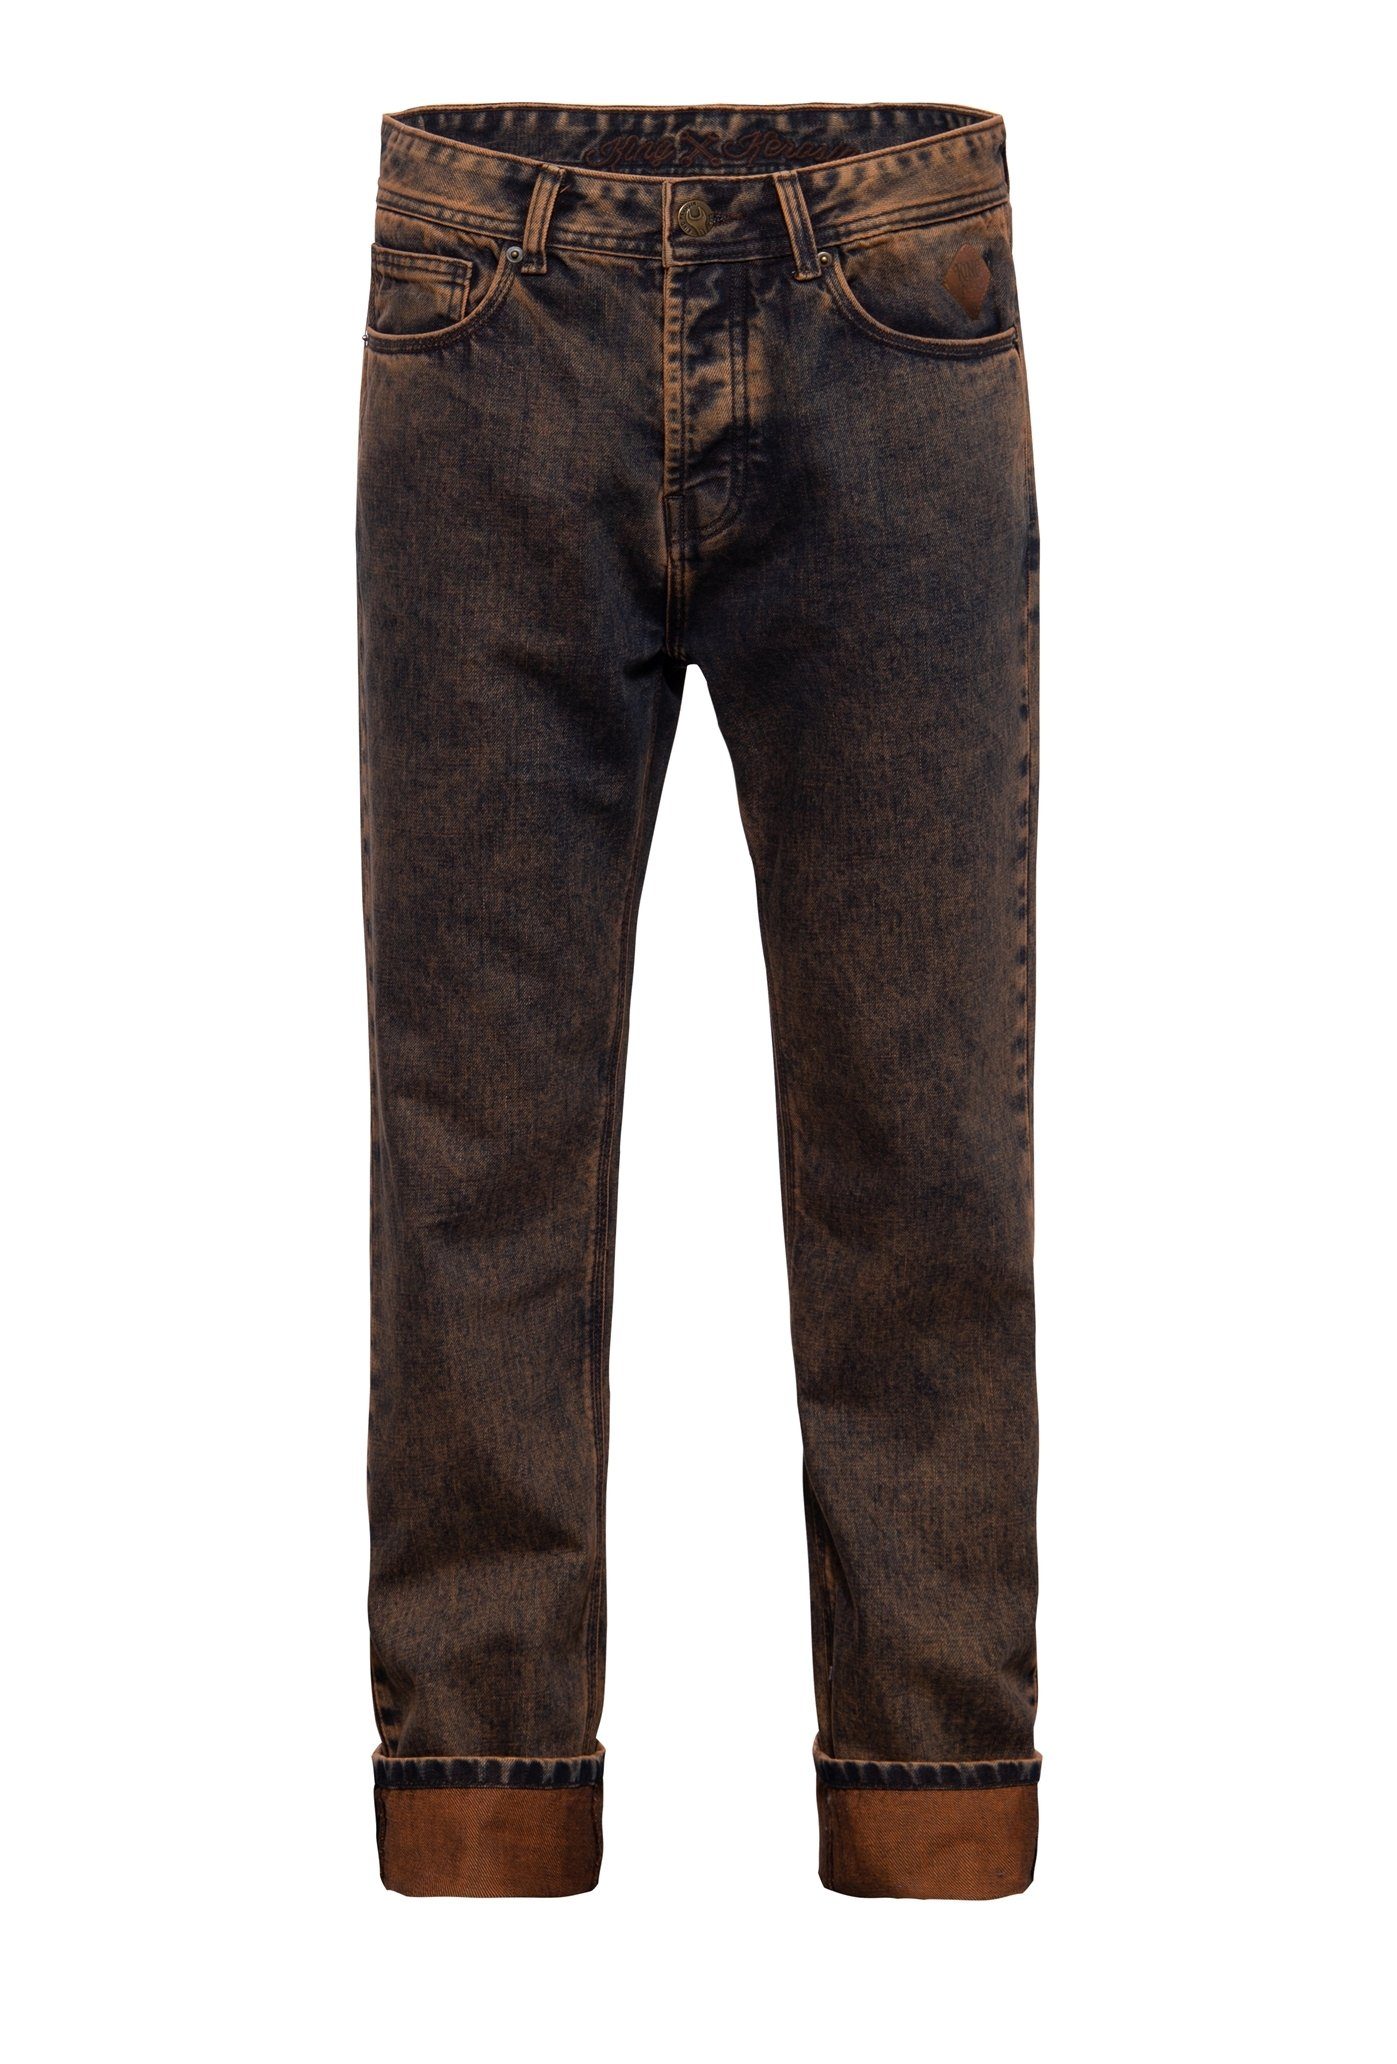 Washed KingKerosin Dirt Scott 5-Pocket-Jeans rostbraun